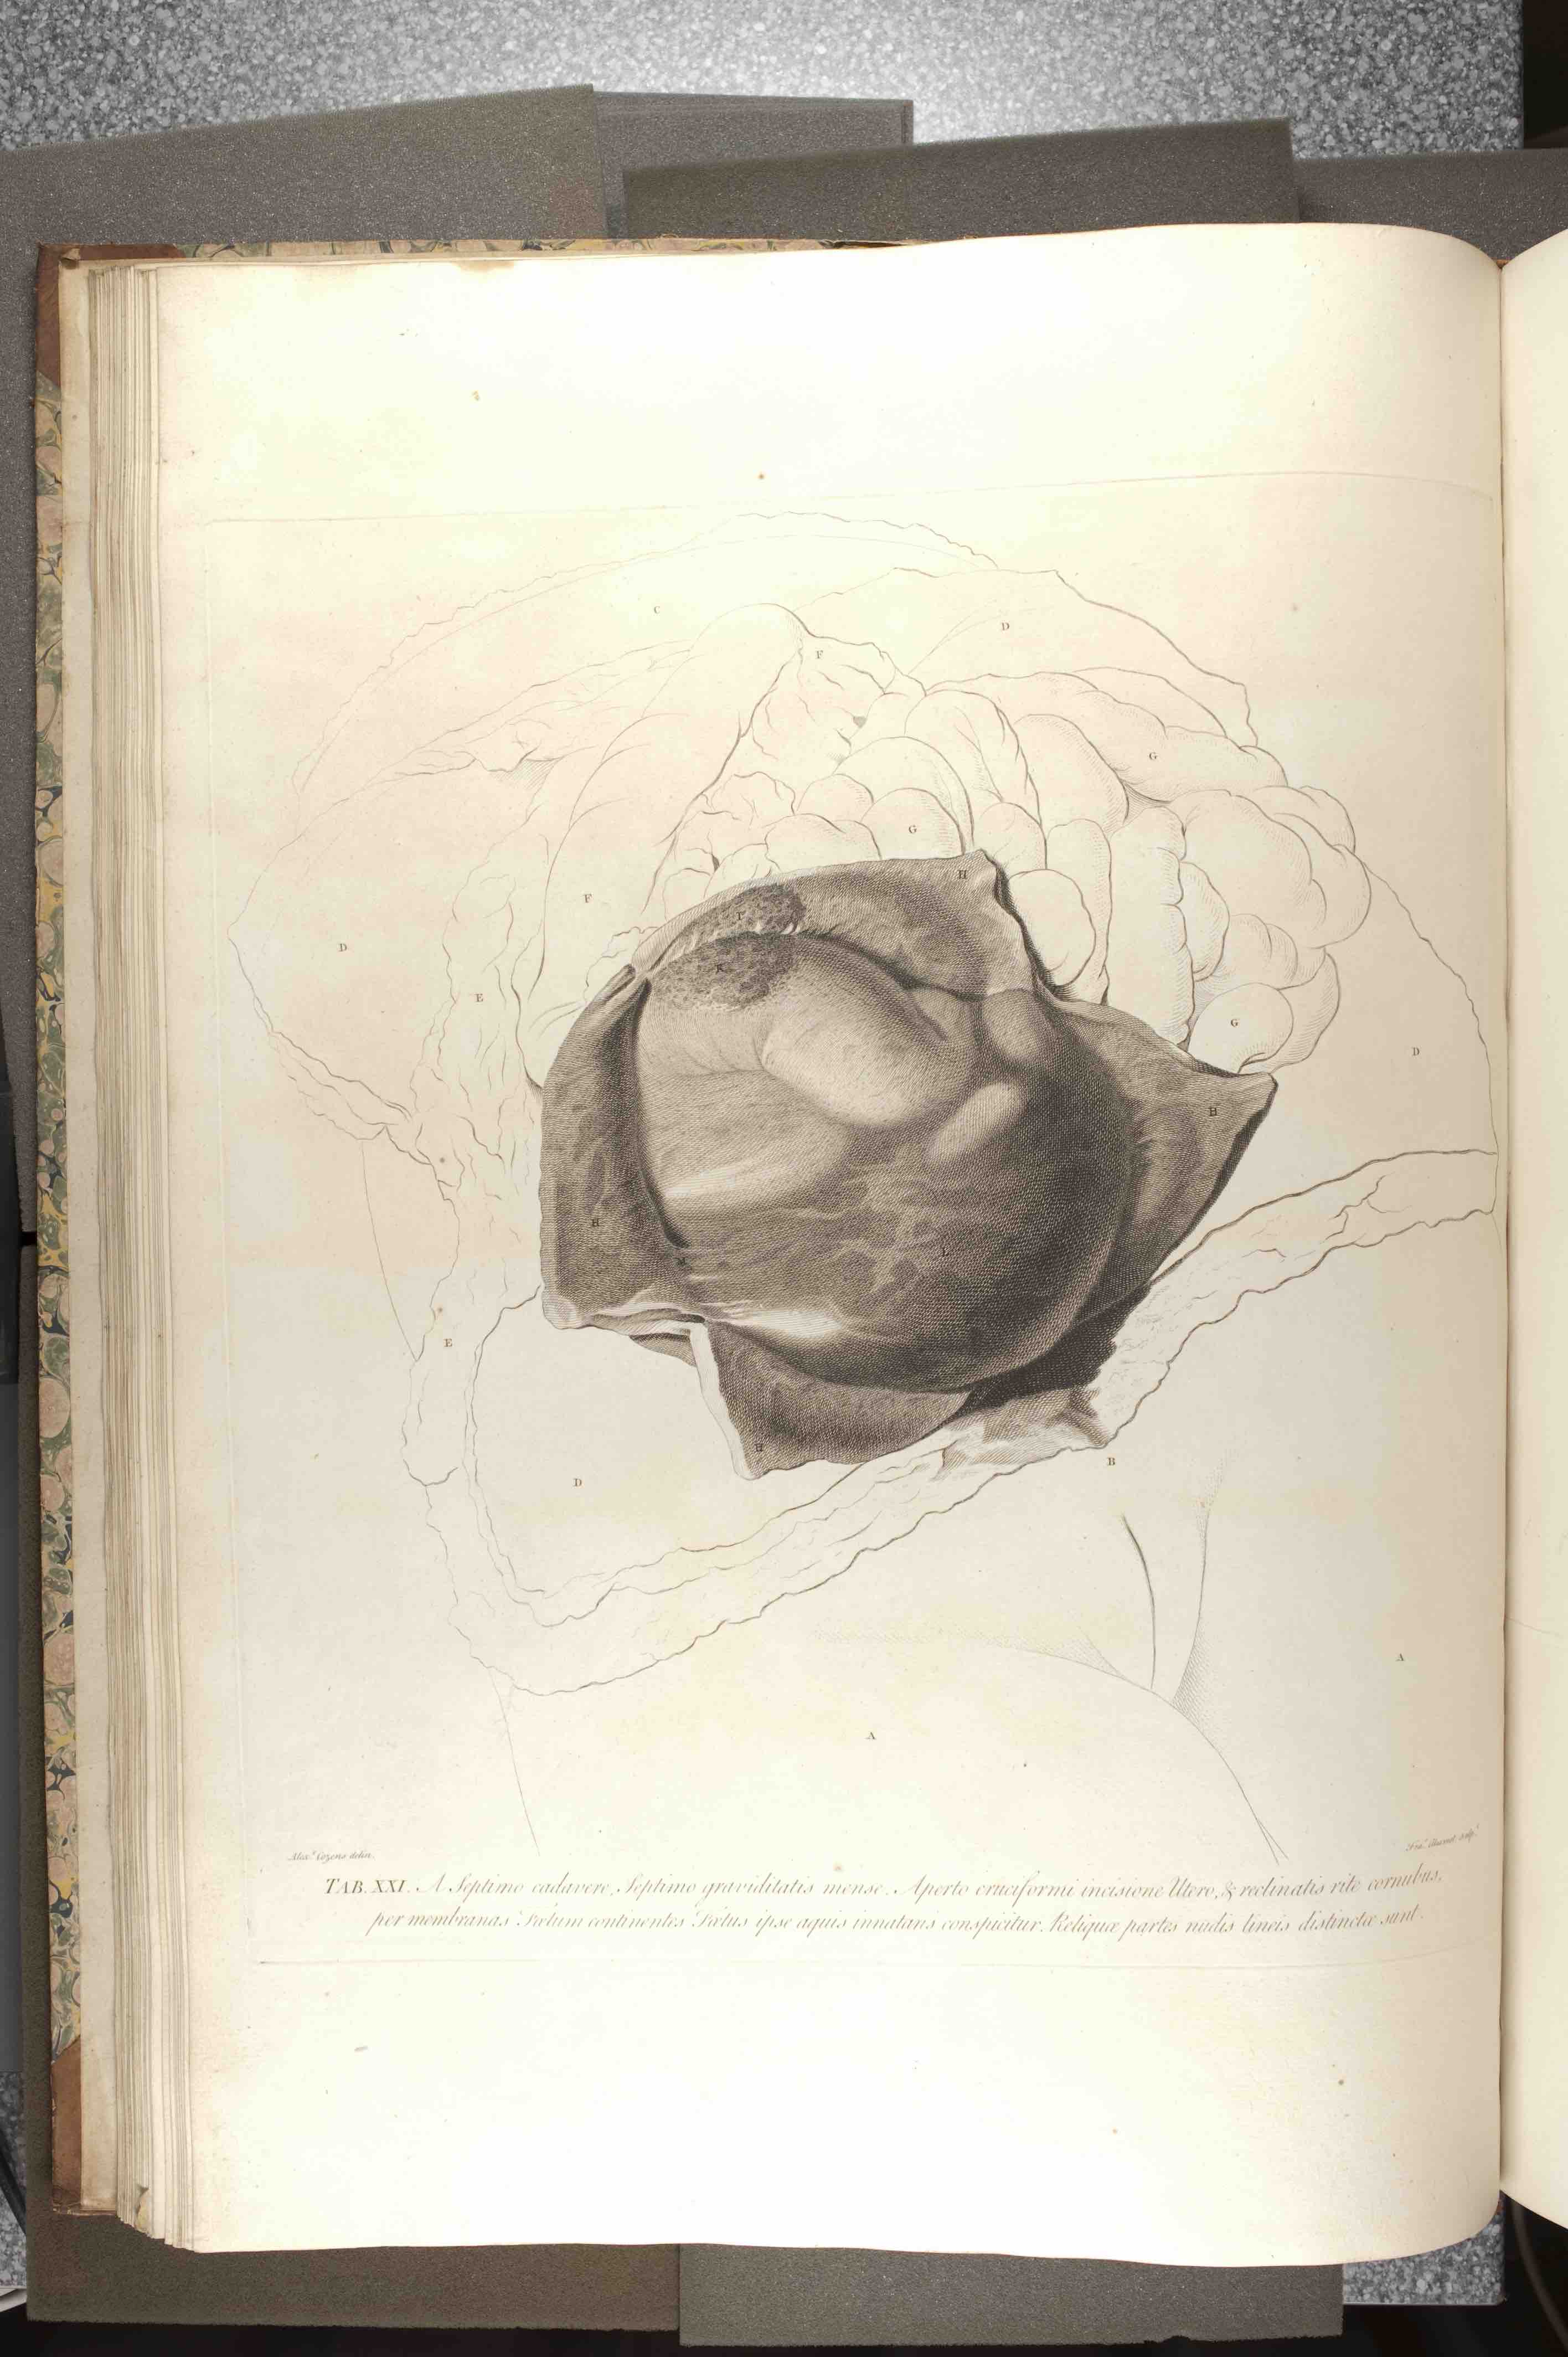 "Table 21 of William Hunter, Anatomia Uteri Humani Gravidi Tabulis Illustrata (Birmingham: John Baskerville, 1774), University of St Andrews Library, rfx QM421.H8."